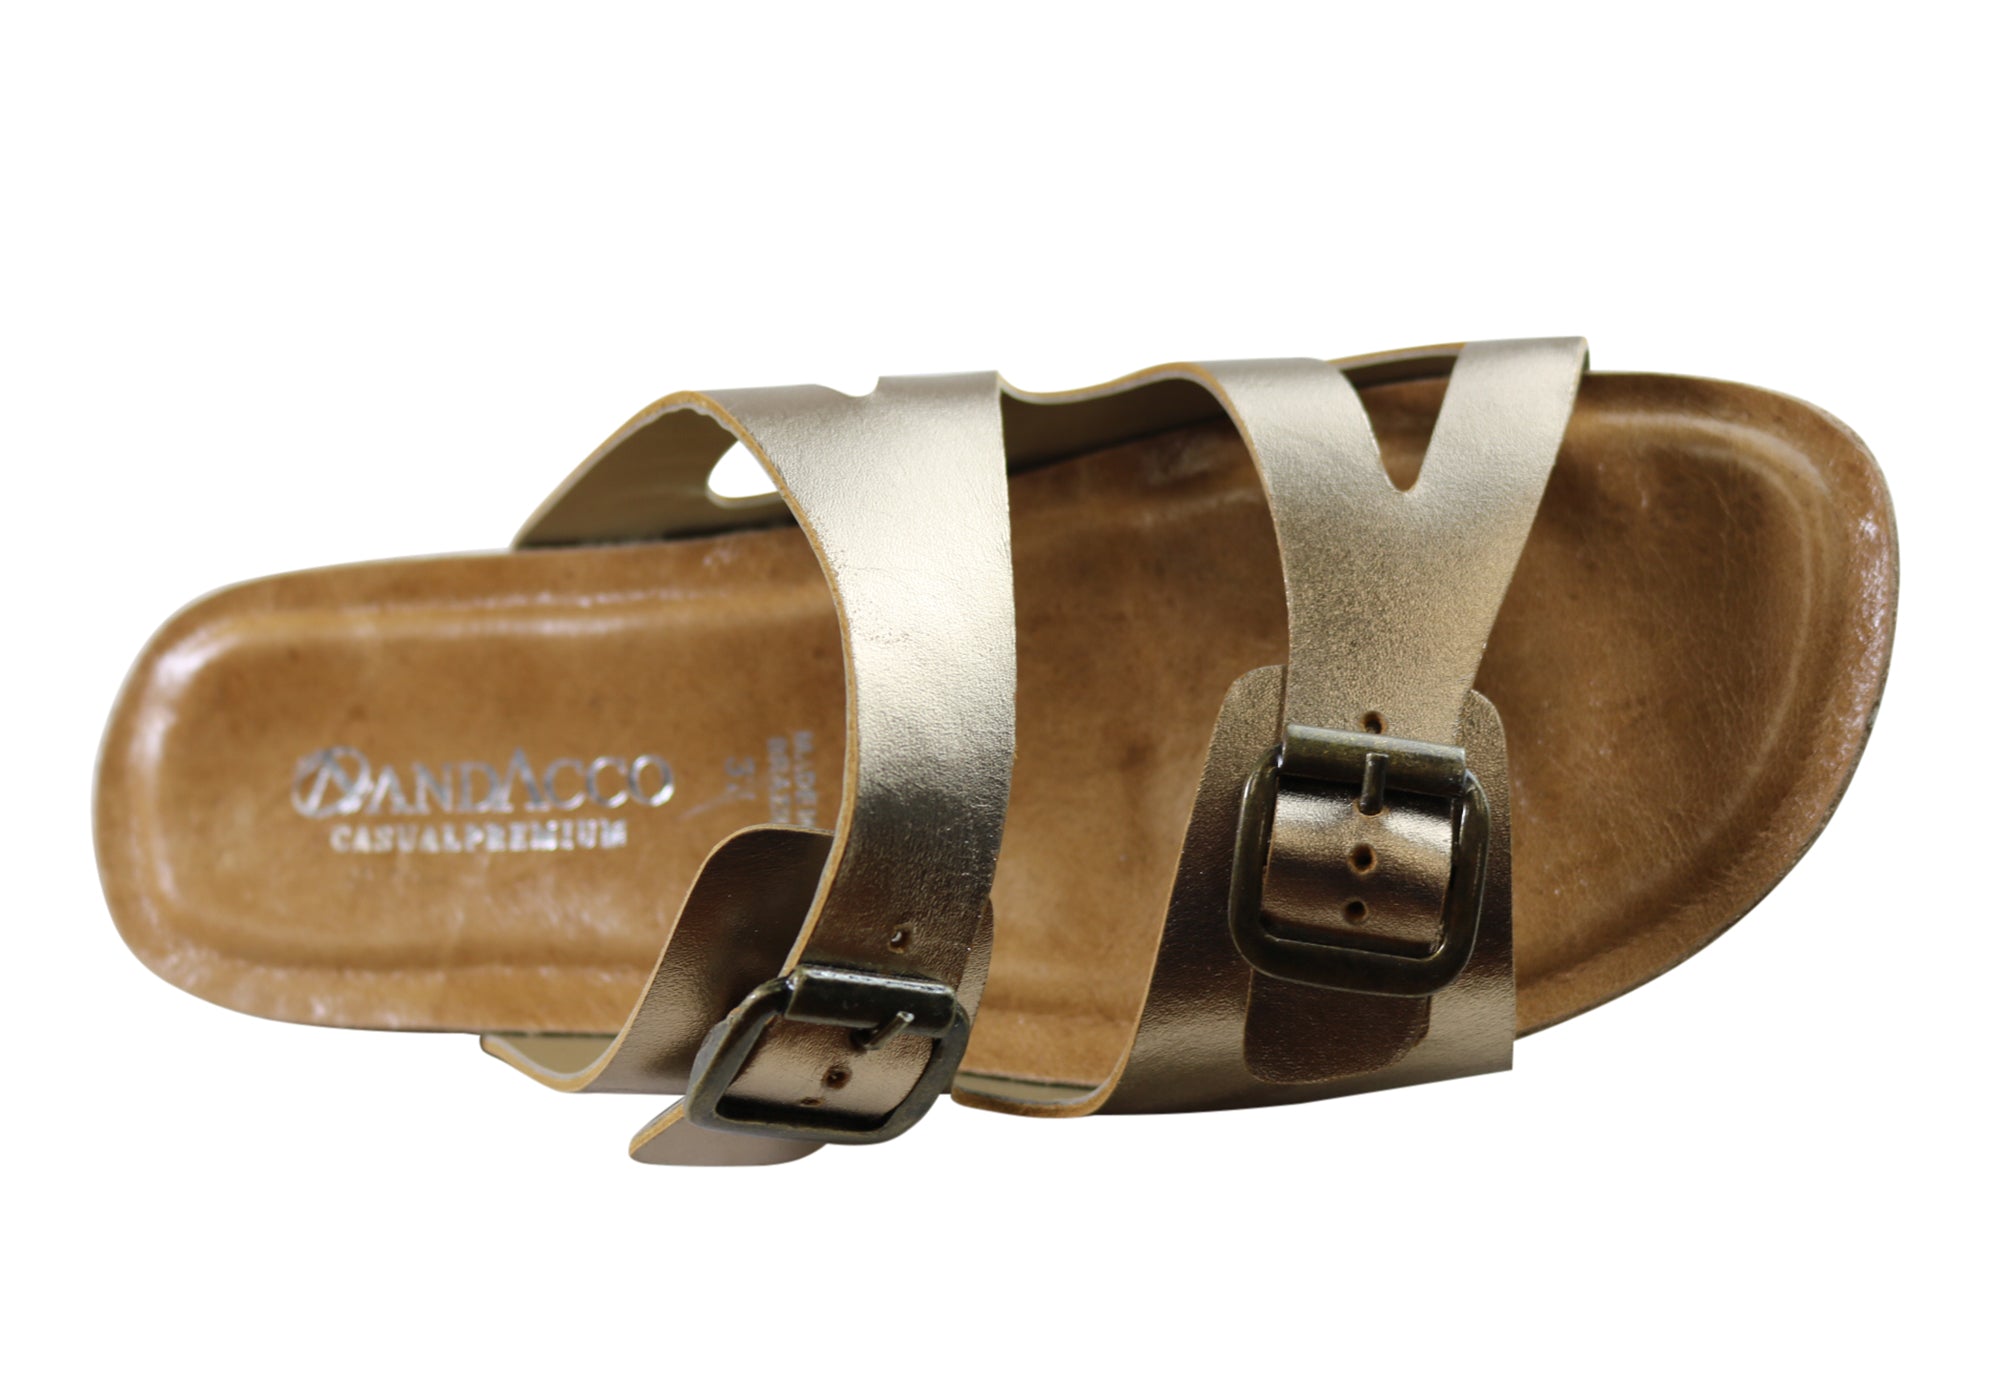 Andacco Angelika Womens Brazilian Comfortable Leather Slides Sandals